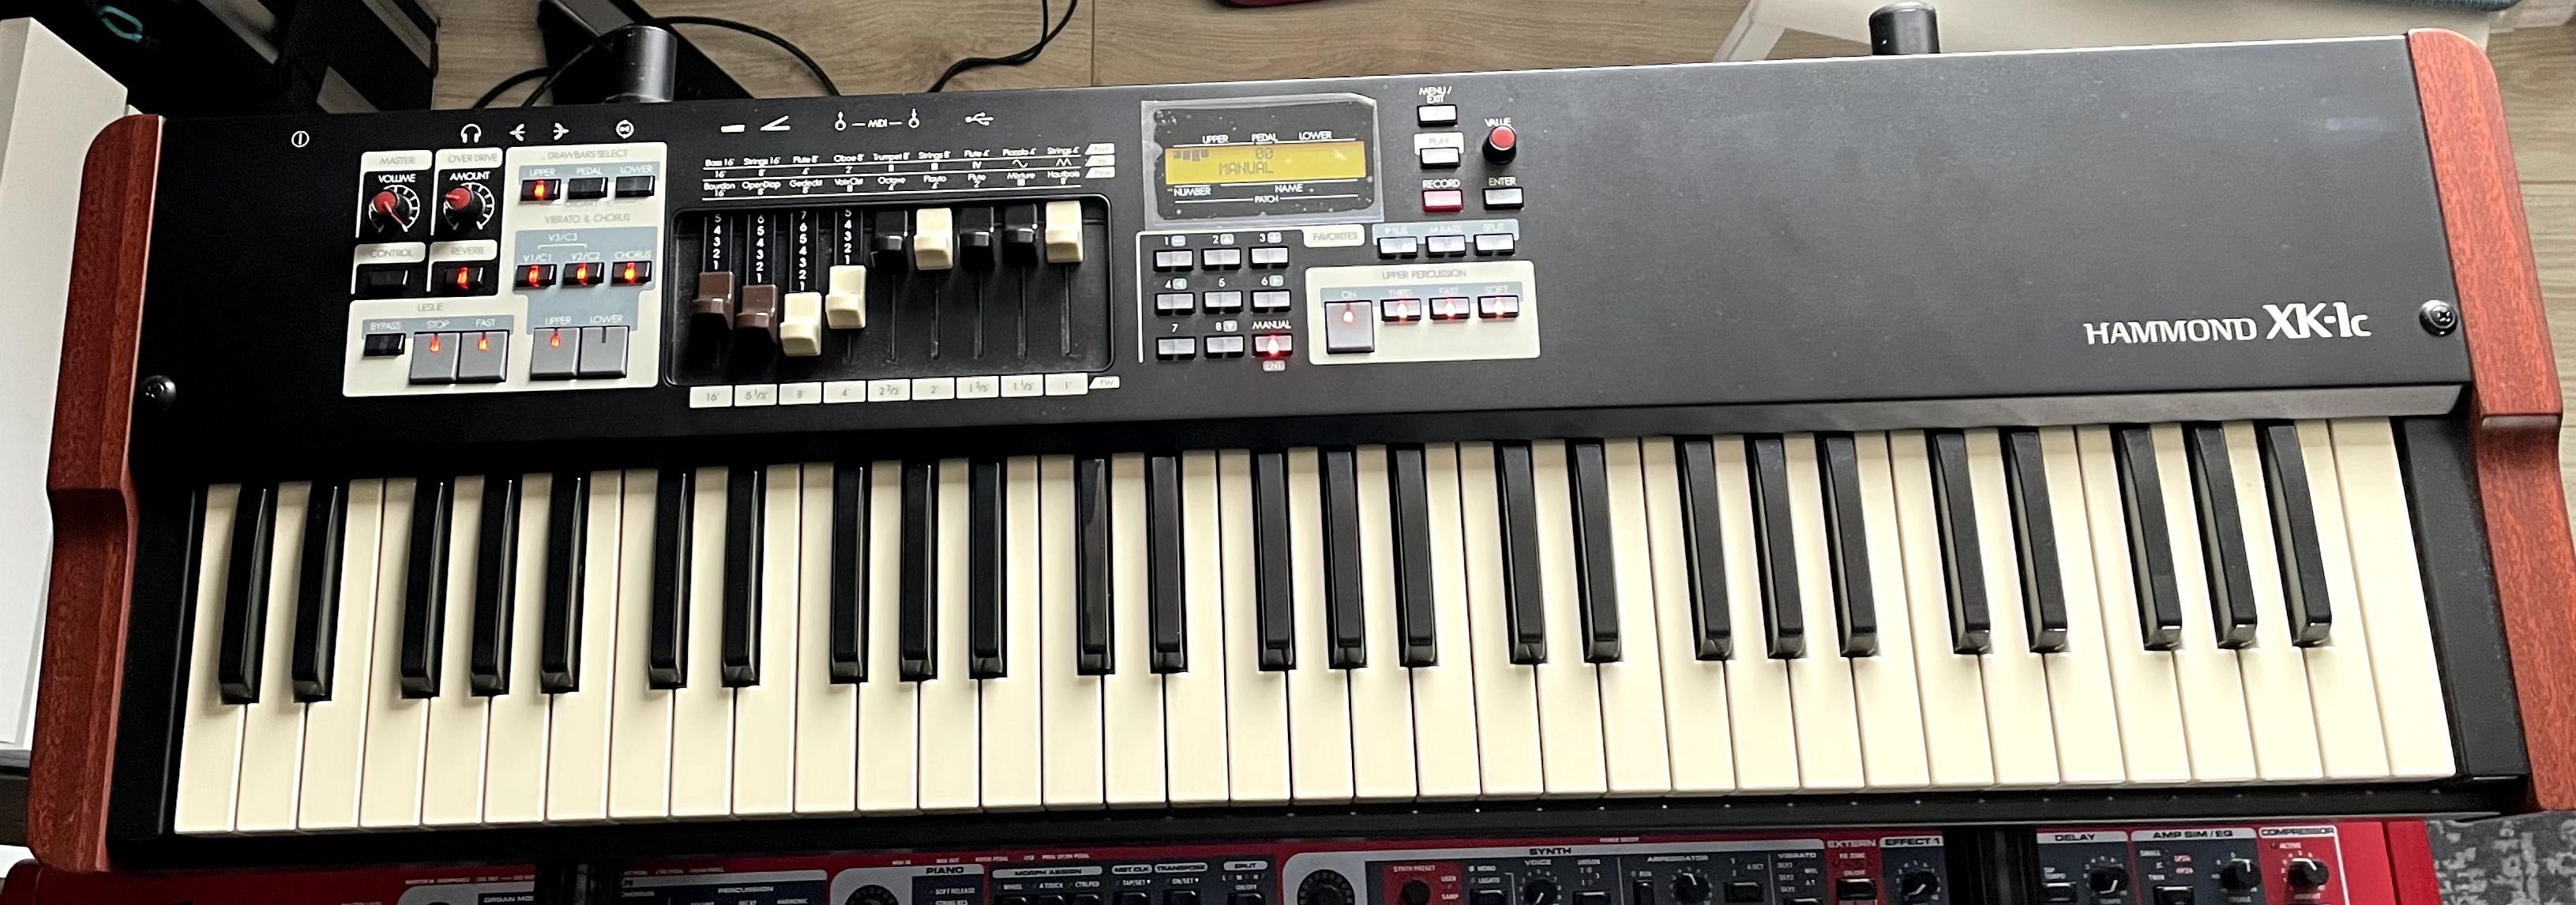 Organy Hammond XK1-c